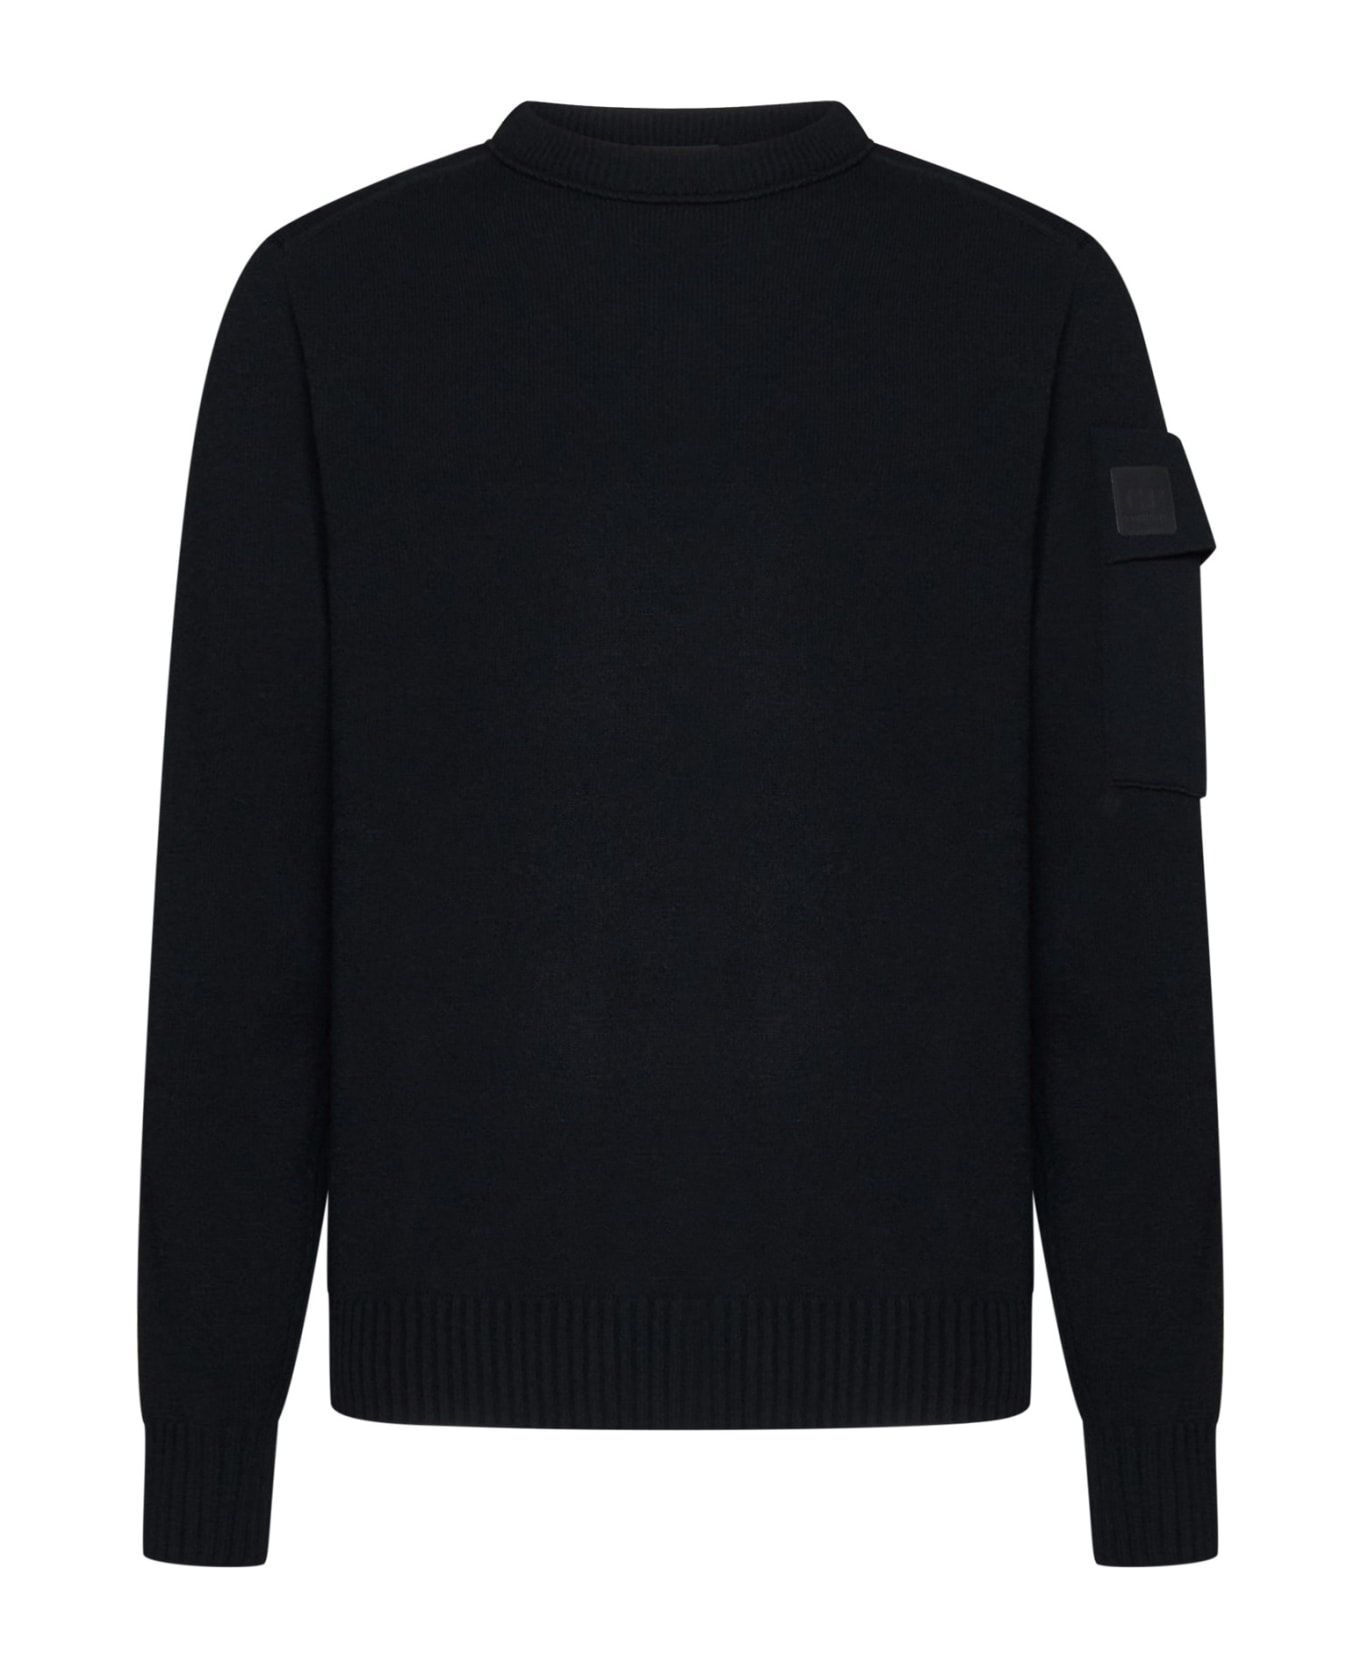 C.P. Company Metropolis Sweater - Black